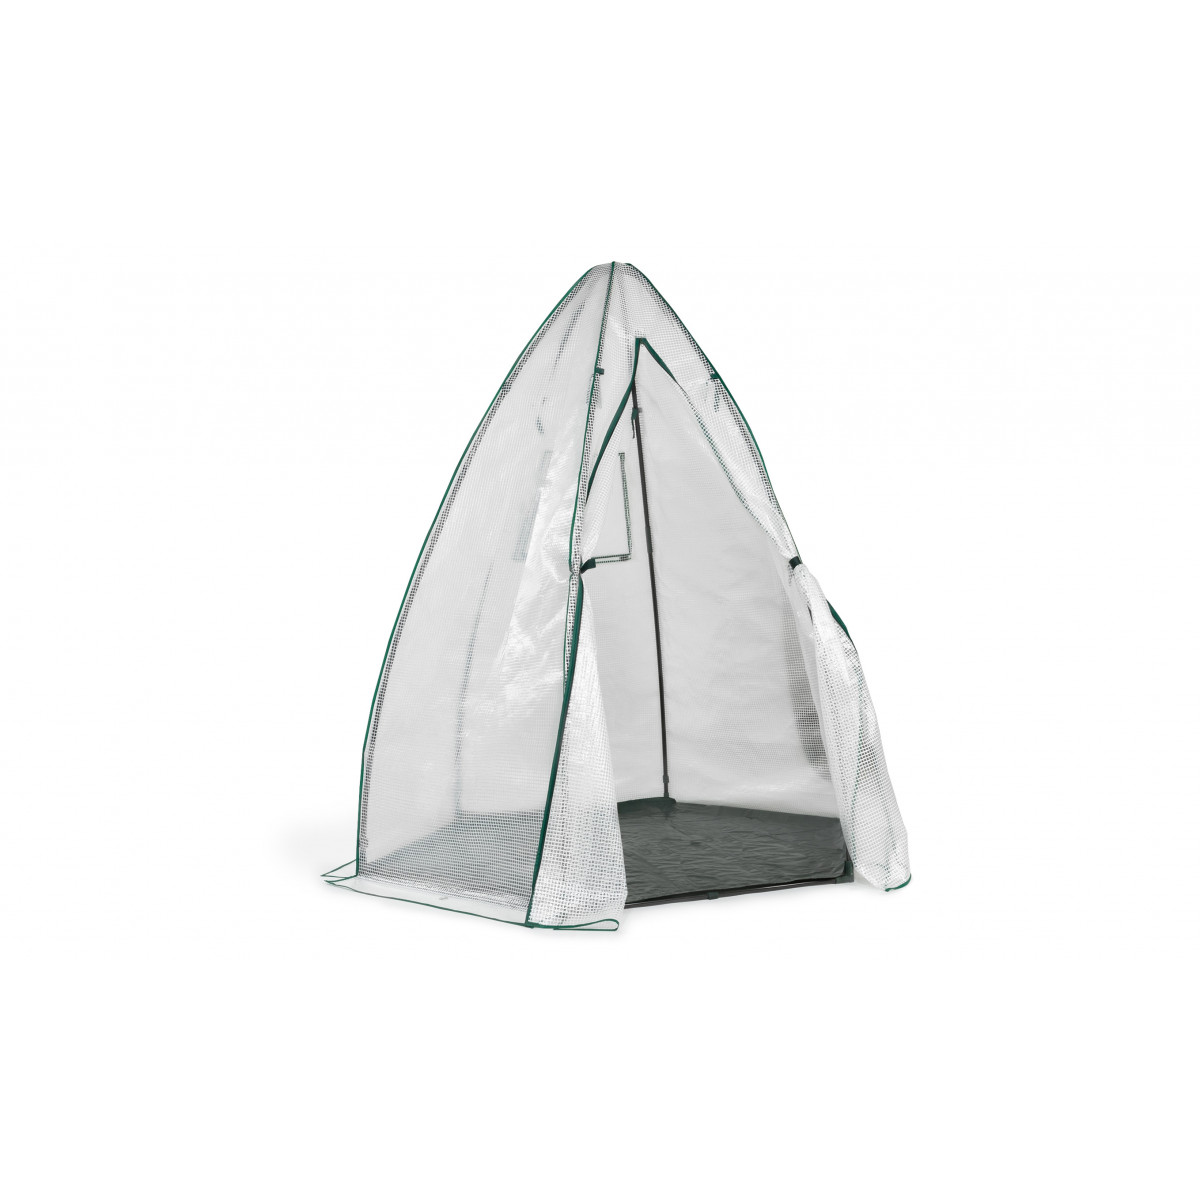 Mini serre, petite tente d'hivernage pour plantes, serre pop-up, petite  tente d'hiver